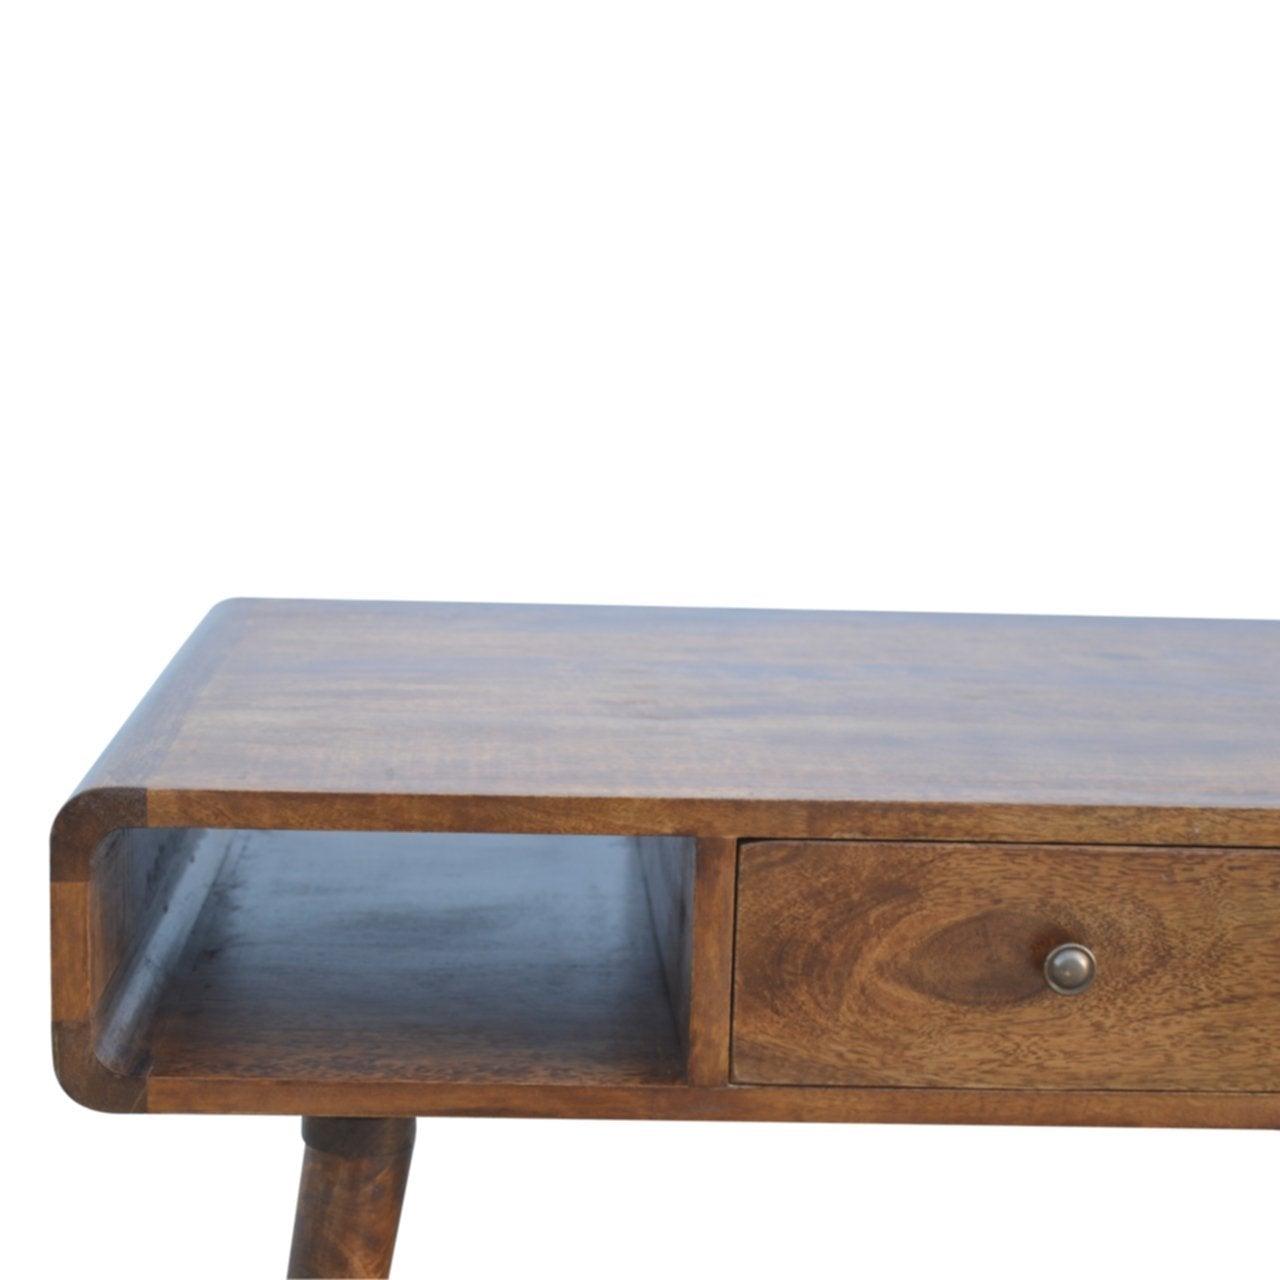 Curved chestnut coffee table - crimblefest furniture - image 5